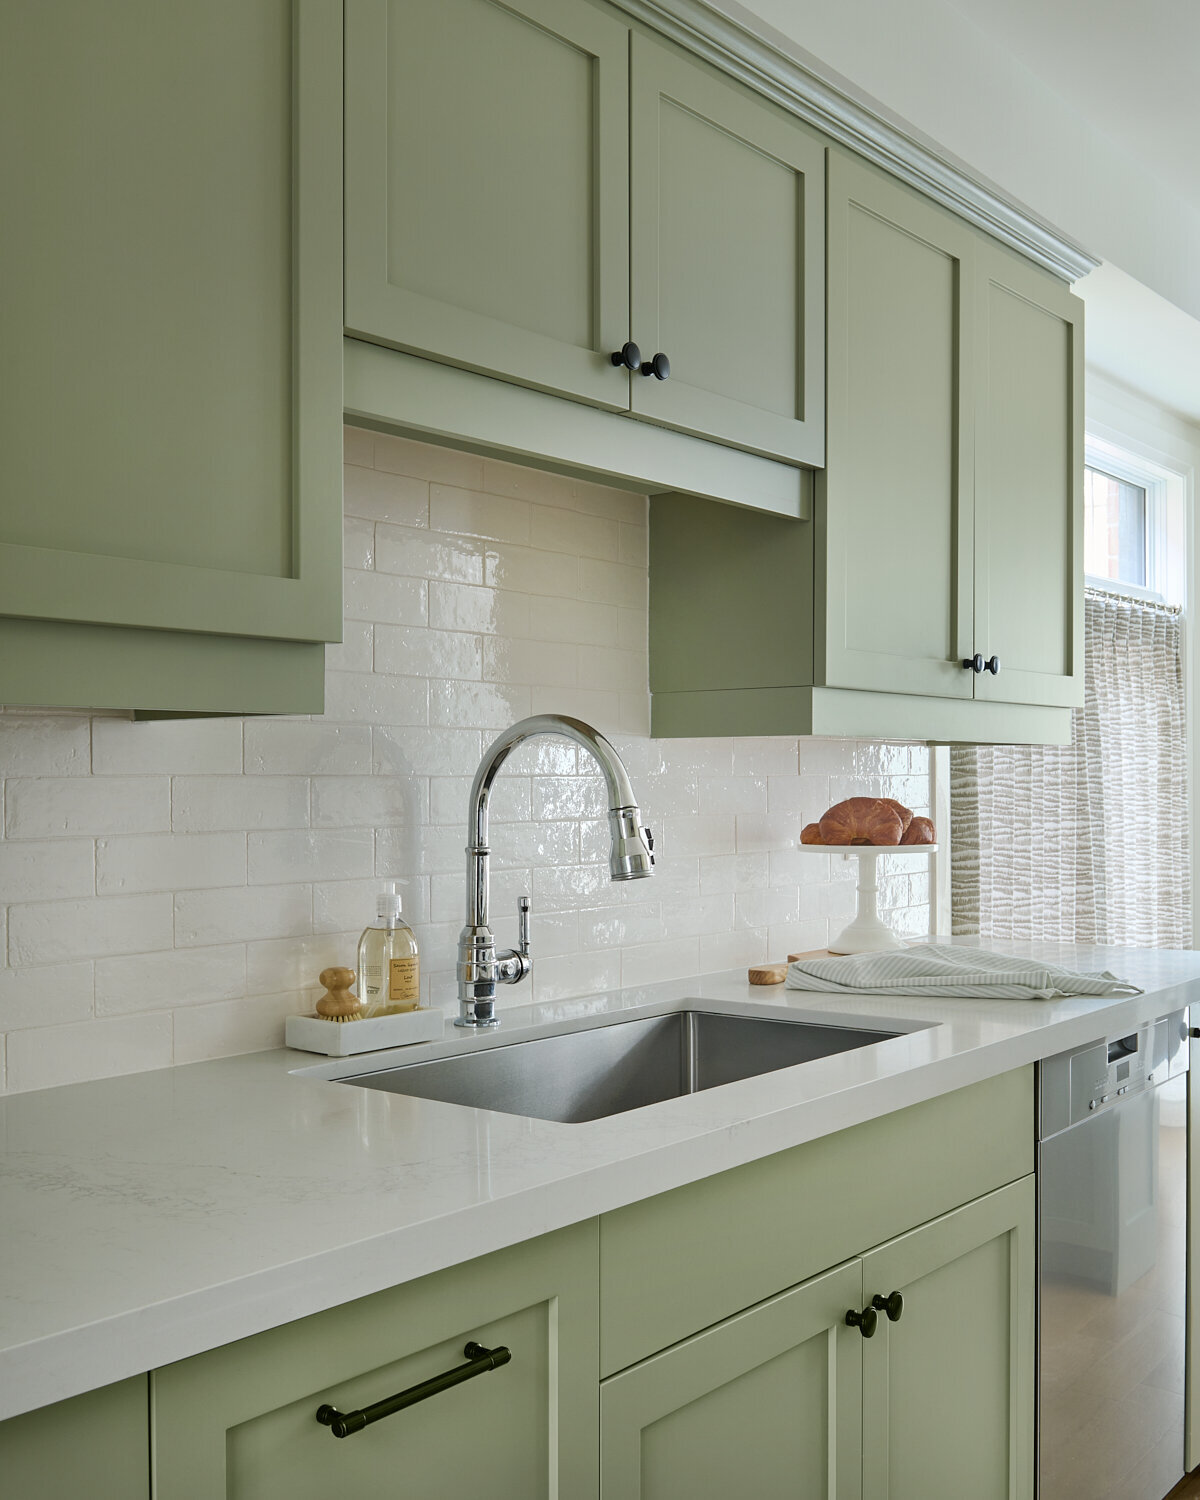 Burlington interior design project - sink area in kitchen - Staci Edwards Interior Design